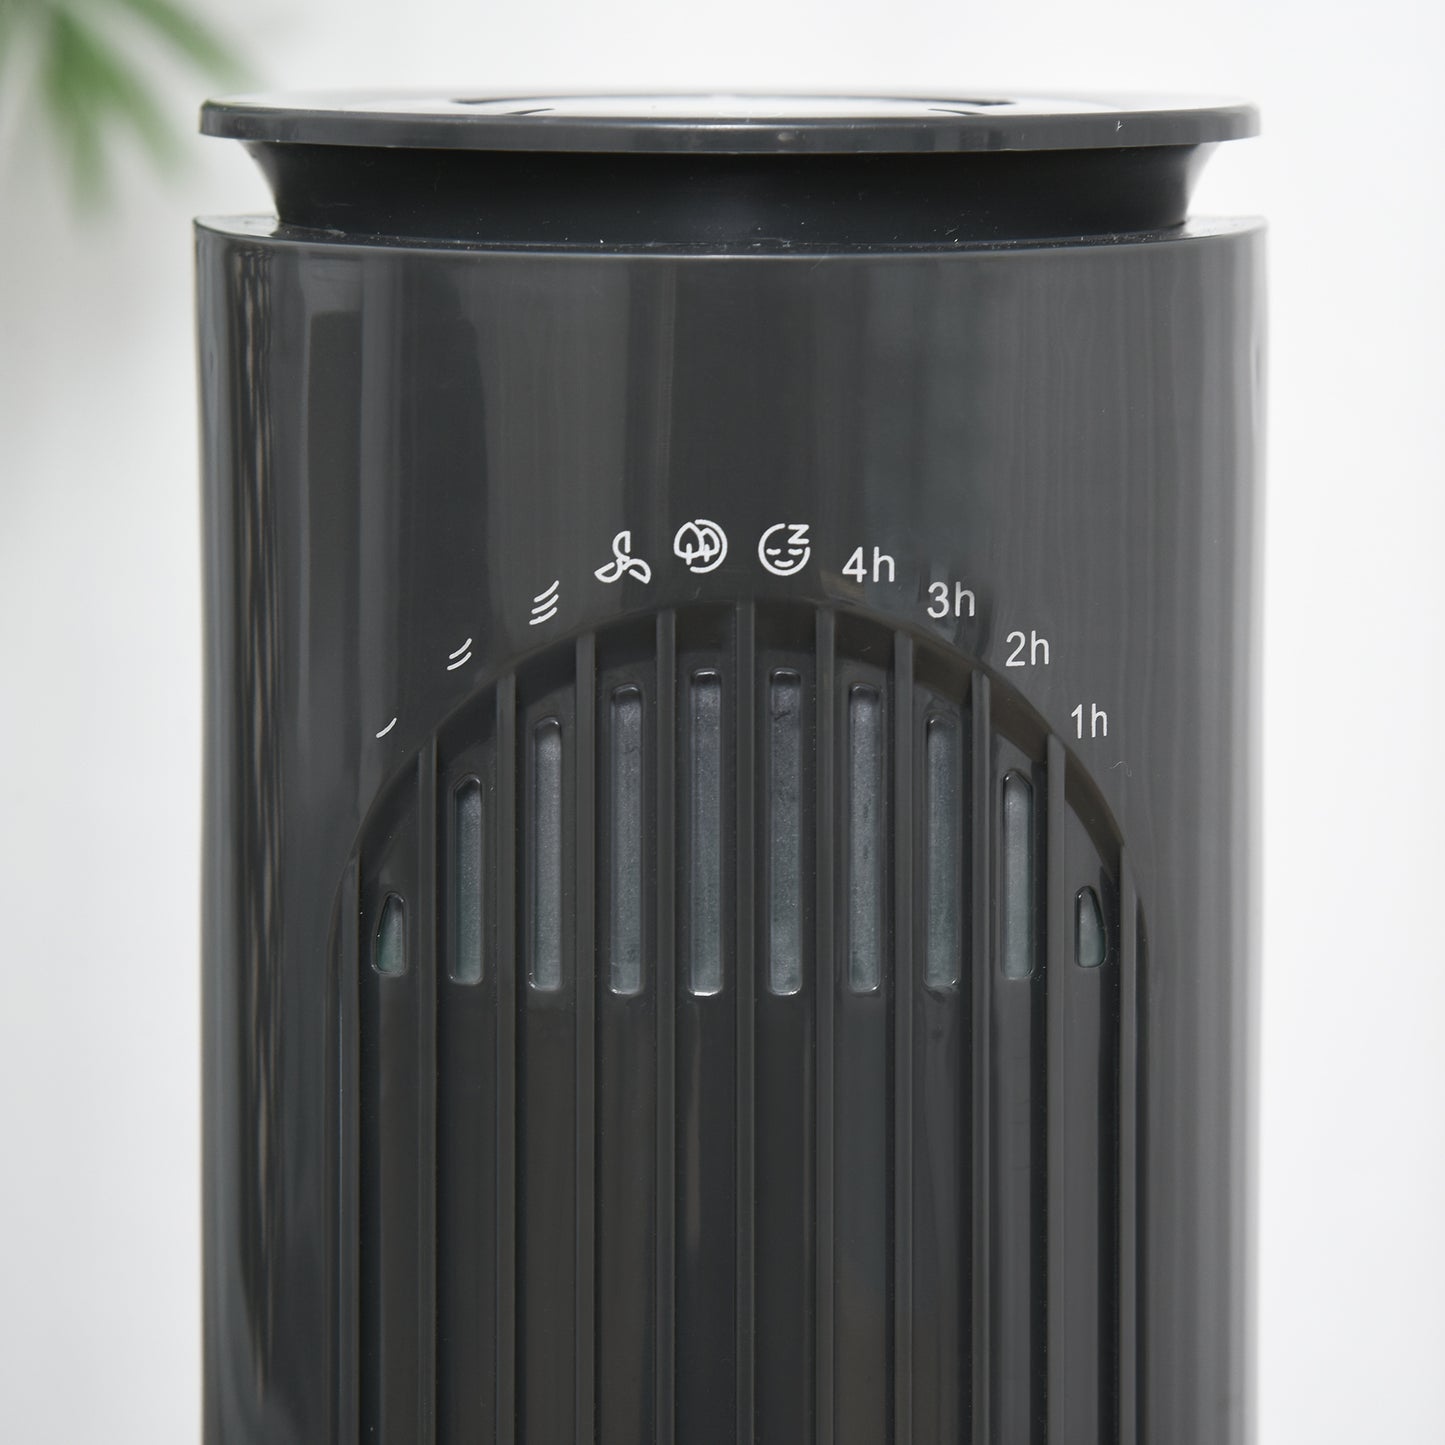 HOMCOM Tower Fan, 30'', with 3 Speeds, 3 Modes, 10h Timer, 70鎺?Oscillation, LED Display, Remote Control, Dark Grey